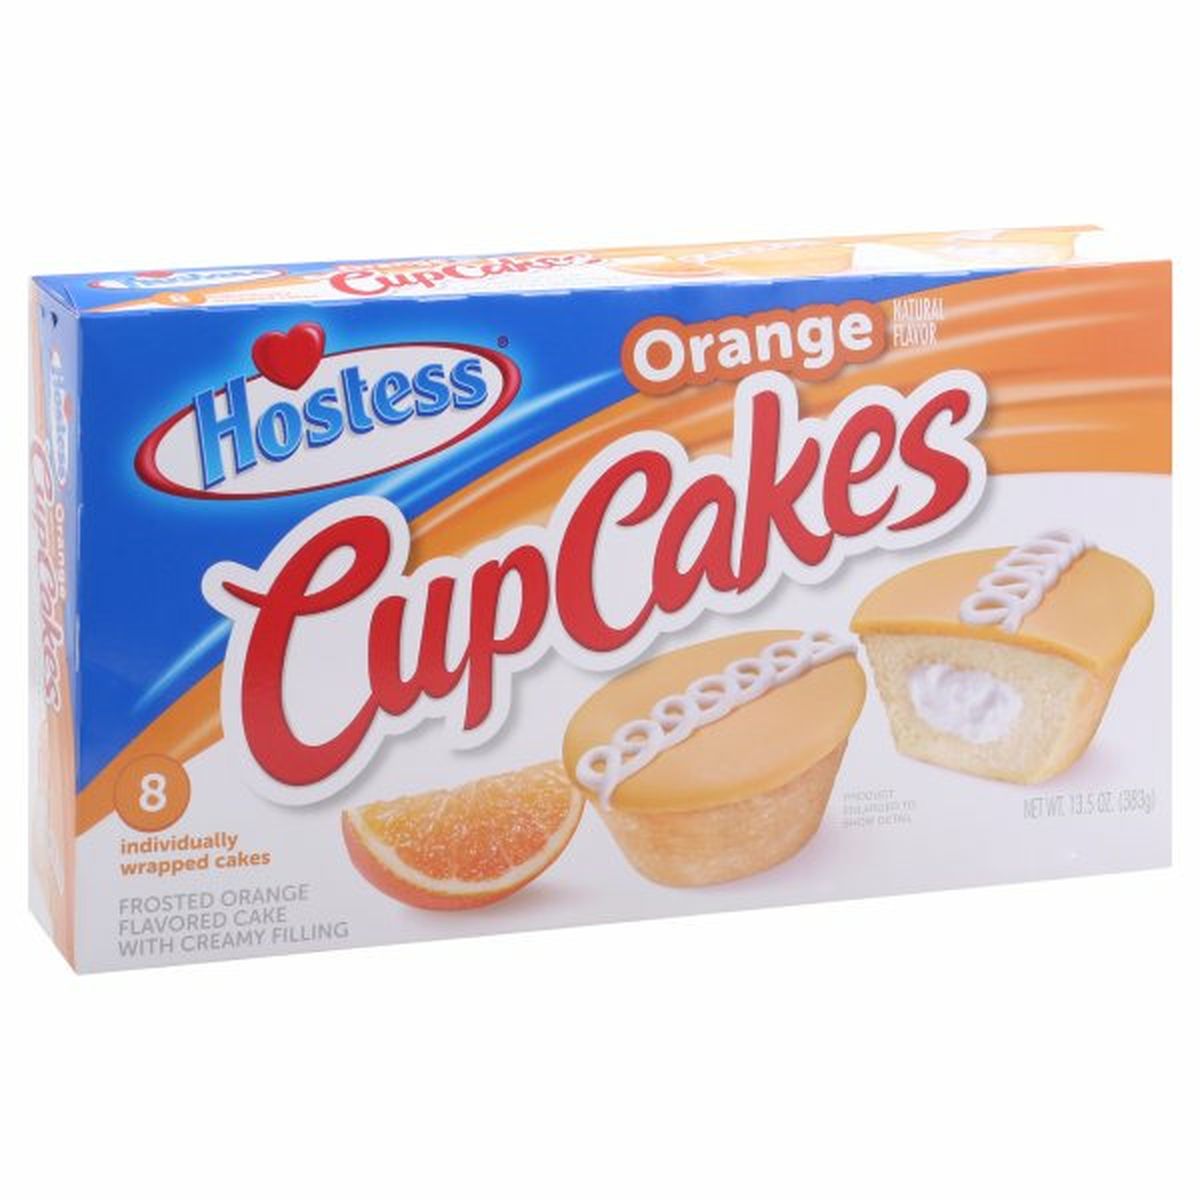 Calories in Hostess CupCakes Cakes, Orange, 8 Pack